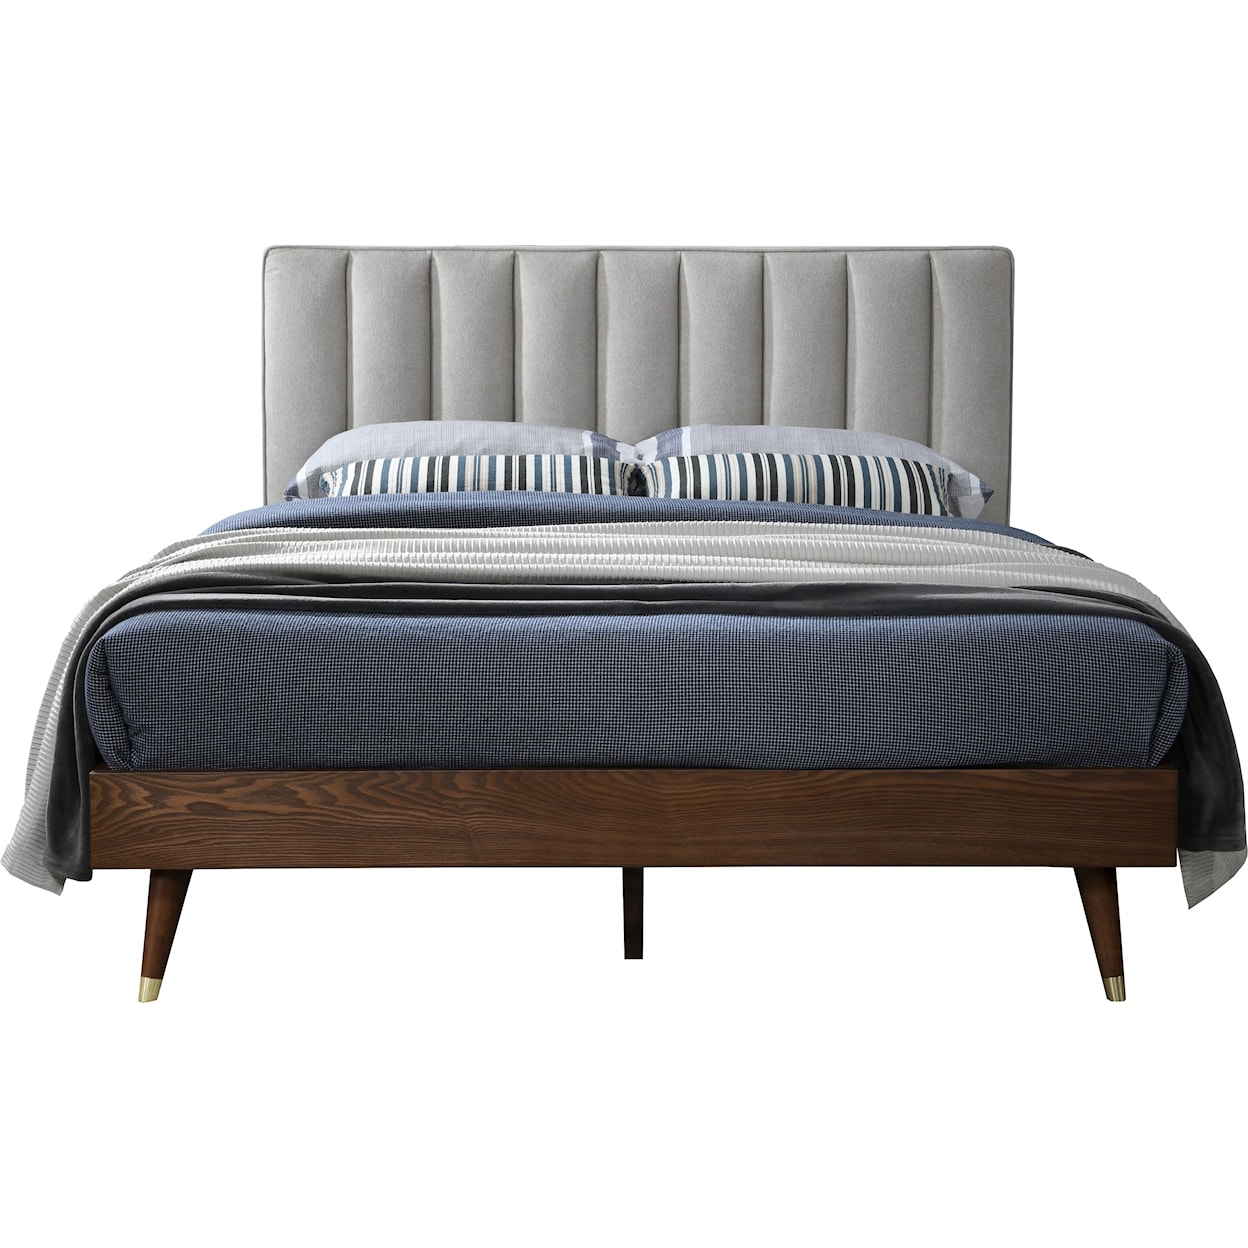 Meridian Furniture Vance King Panel Bed